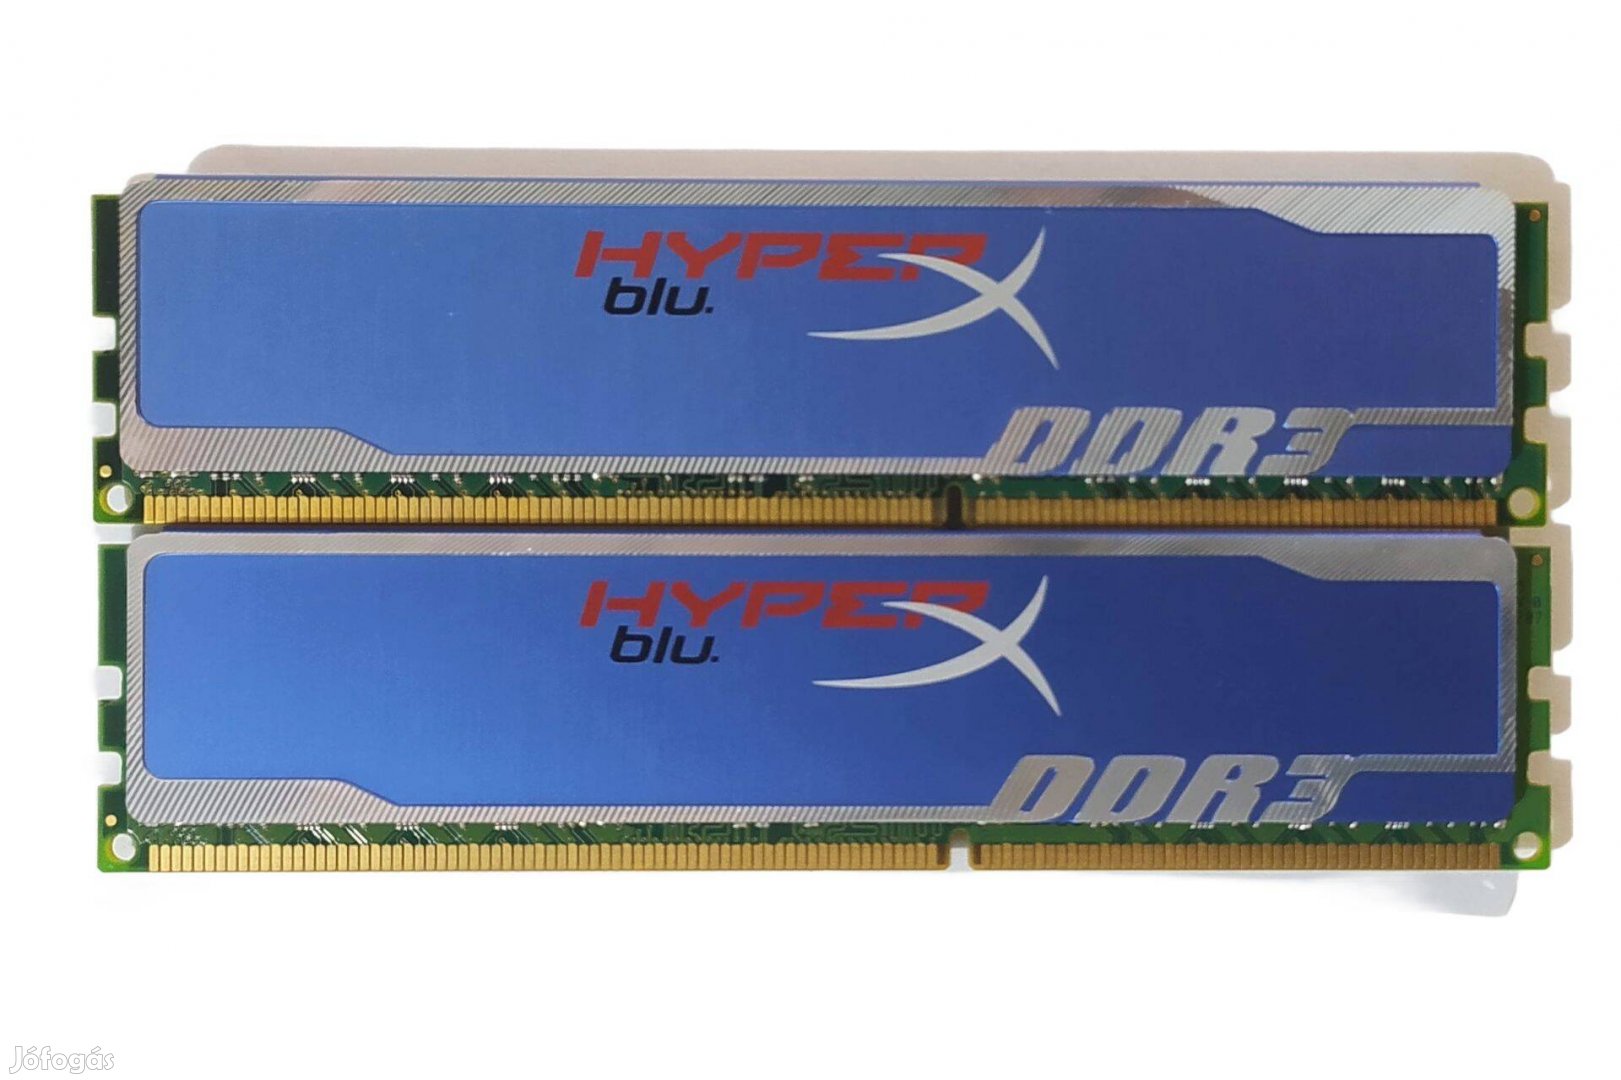 Kingston Hyperx Blu 8GB (2x4GB) DDR3 1600MHz cl9 memória